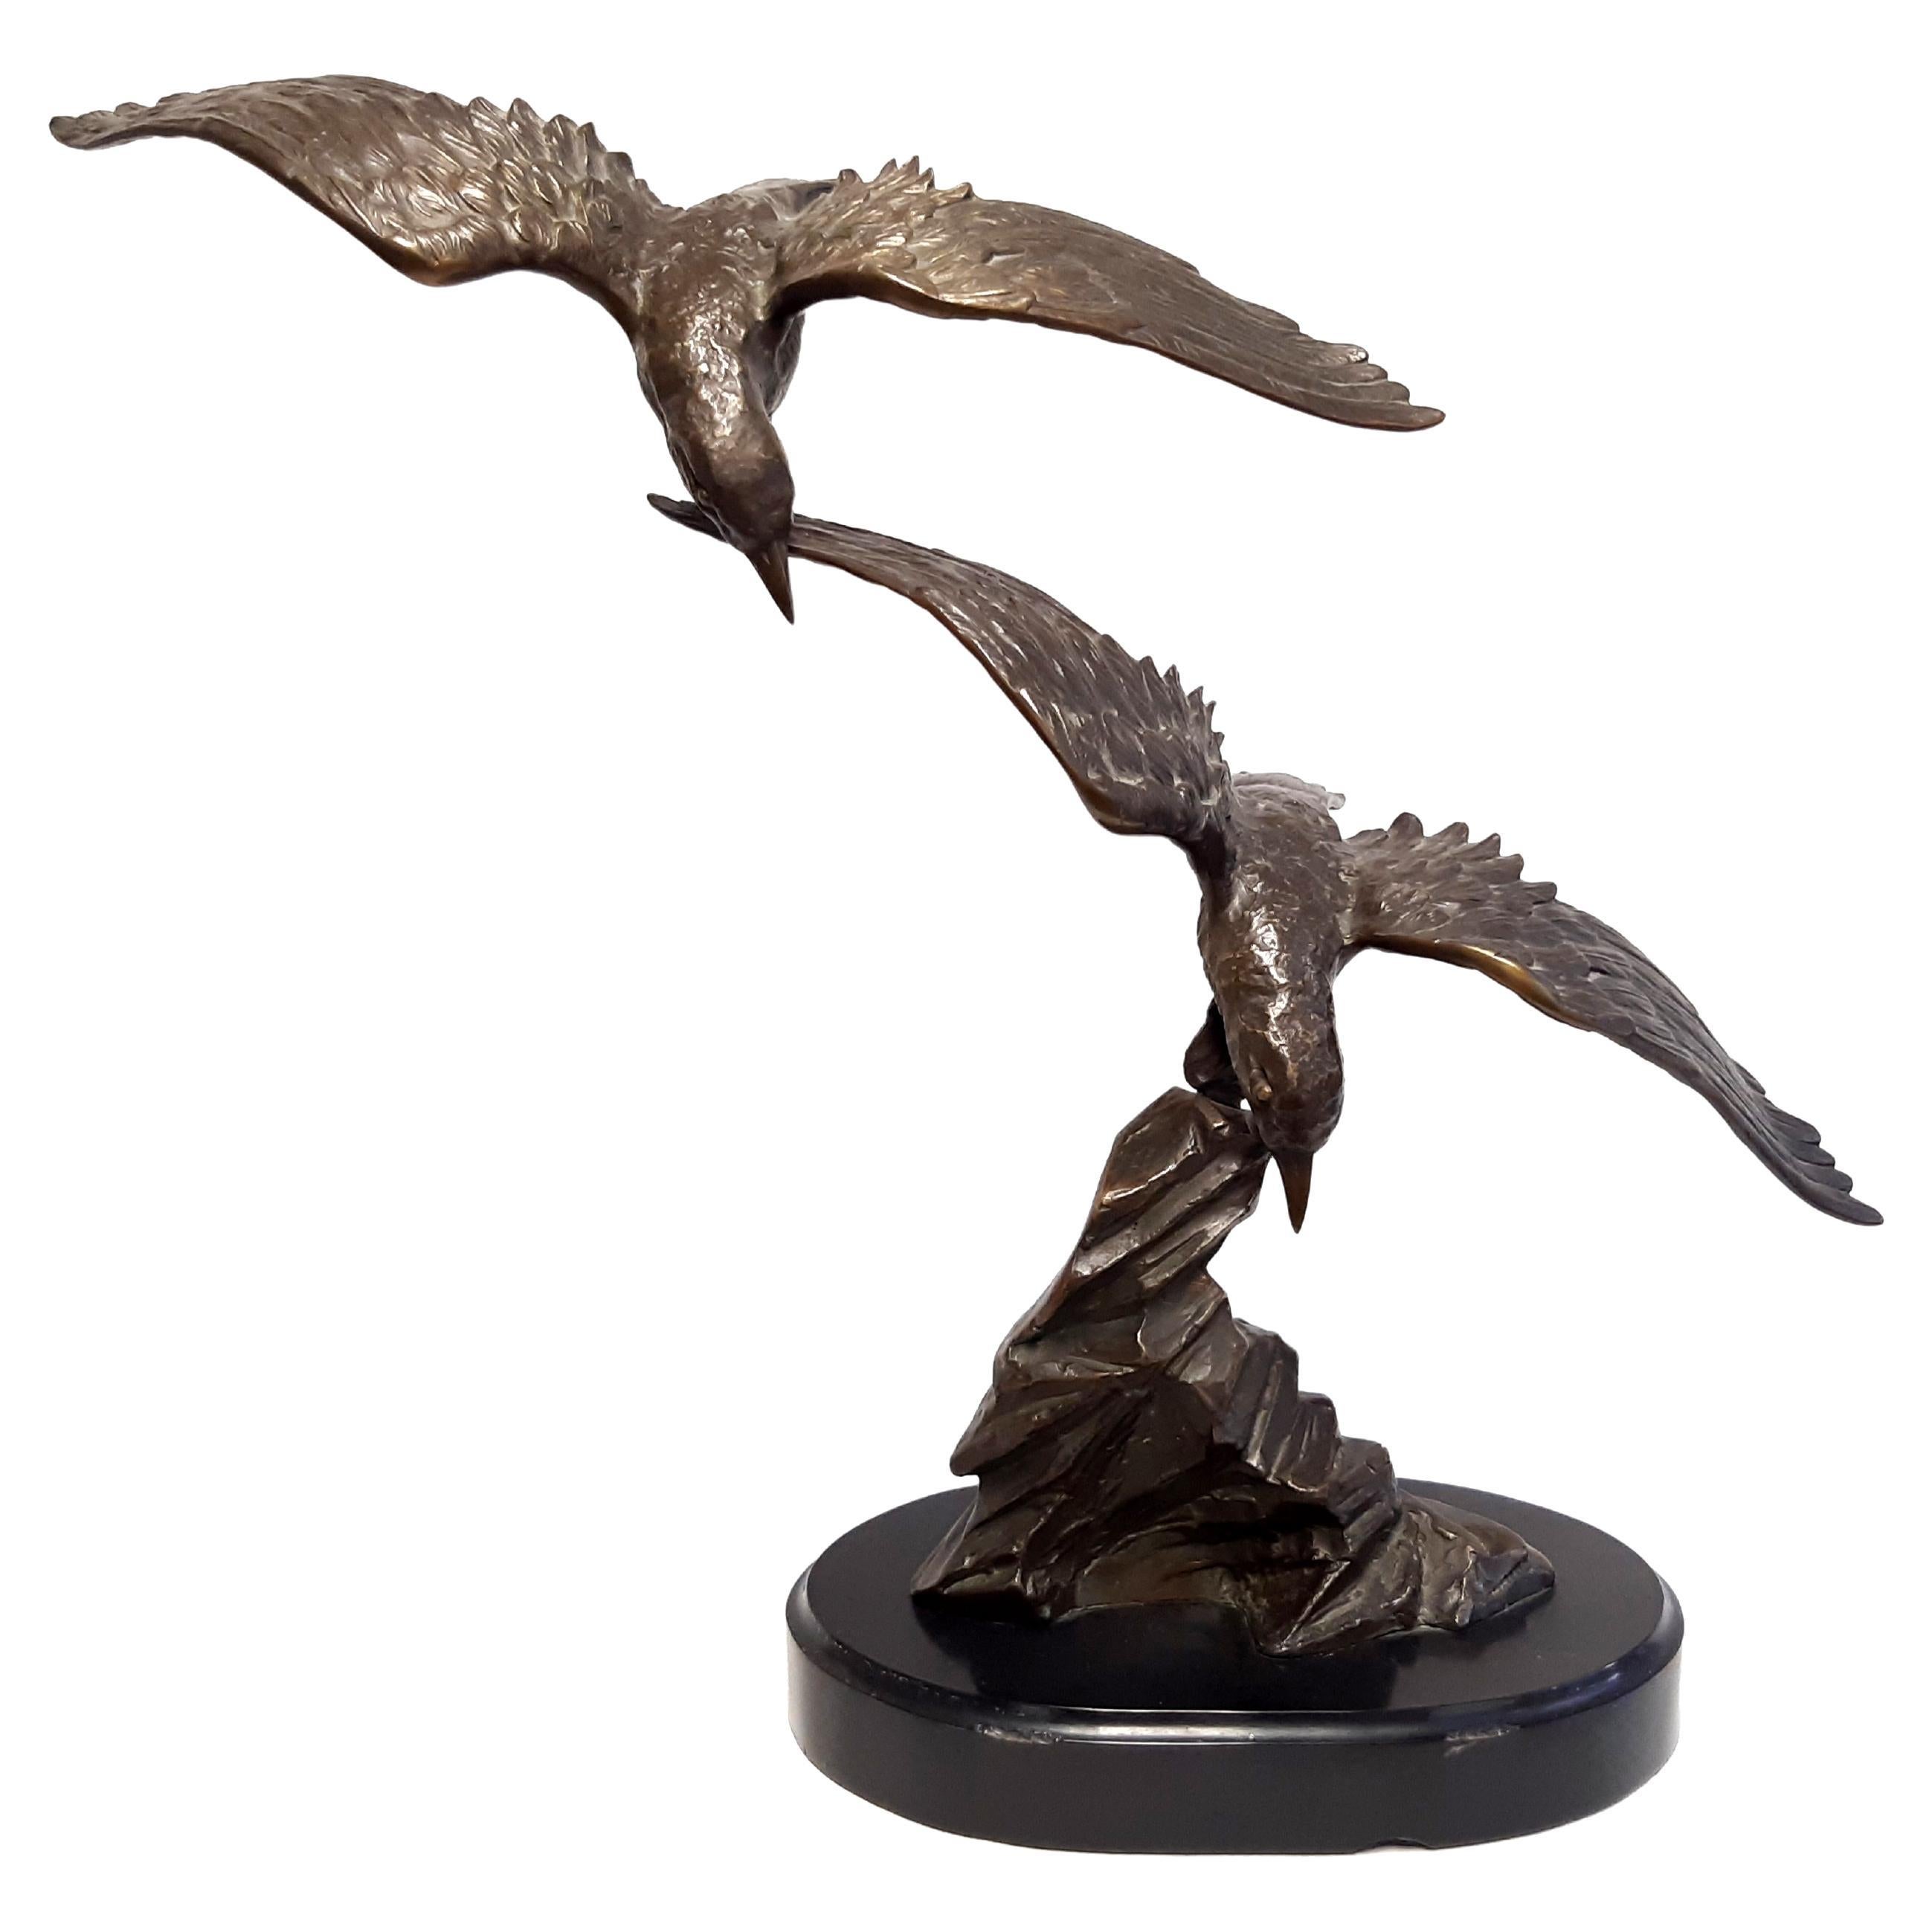 TISSOT Bronzeskulptur "2 fliegende Möwen" - sculpture en bronze "2 Flying Seagulls" (mouettes volantes)